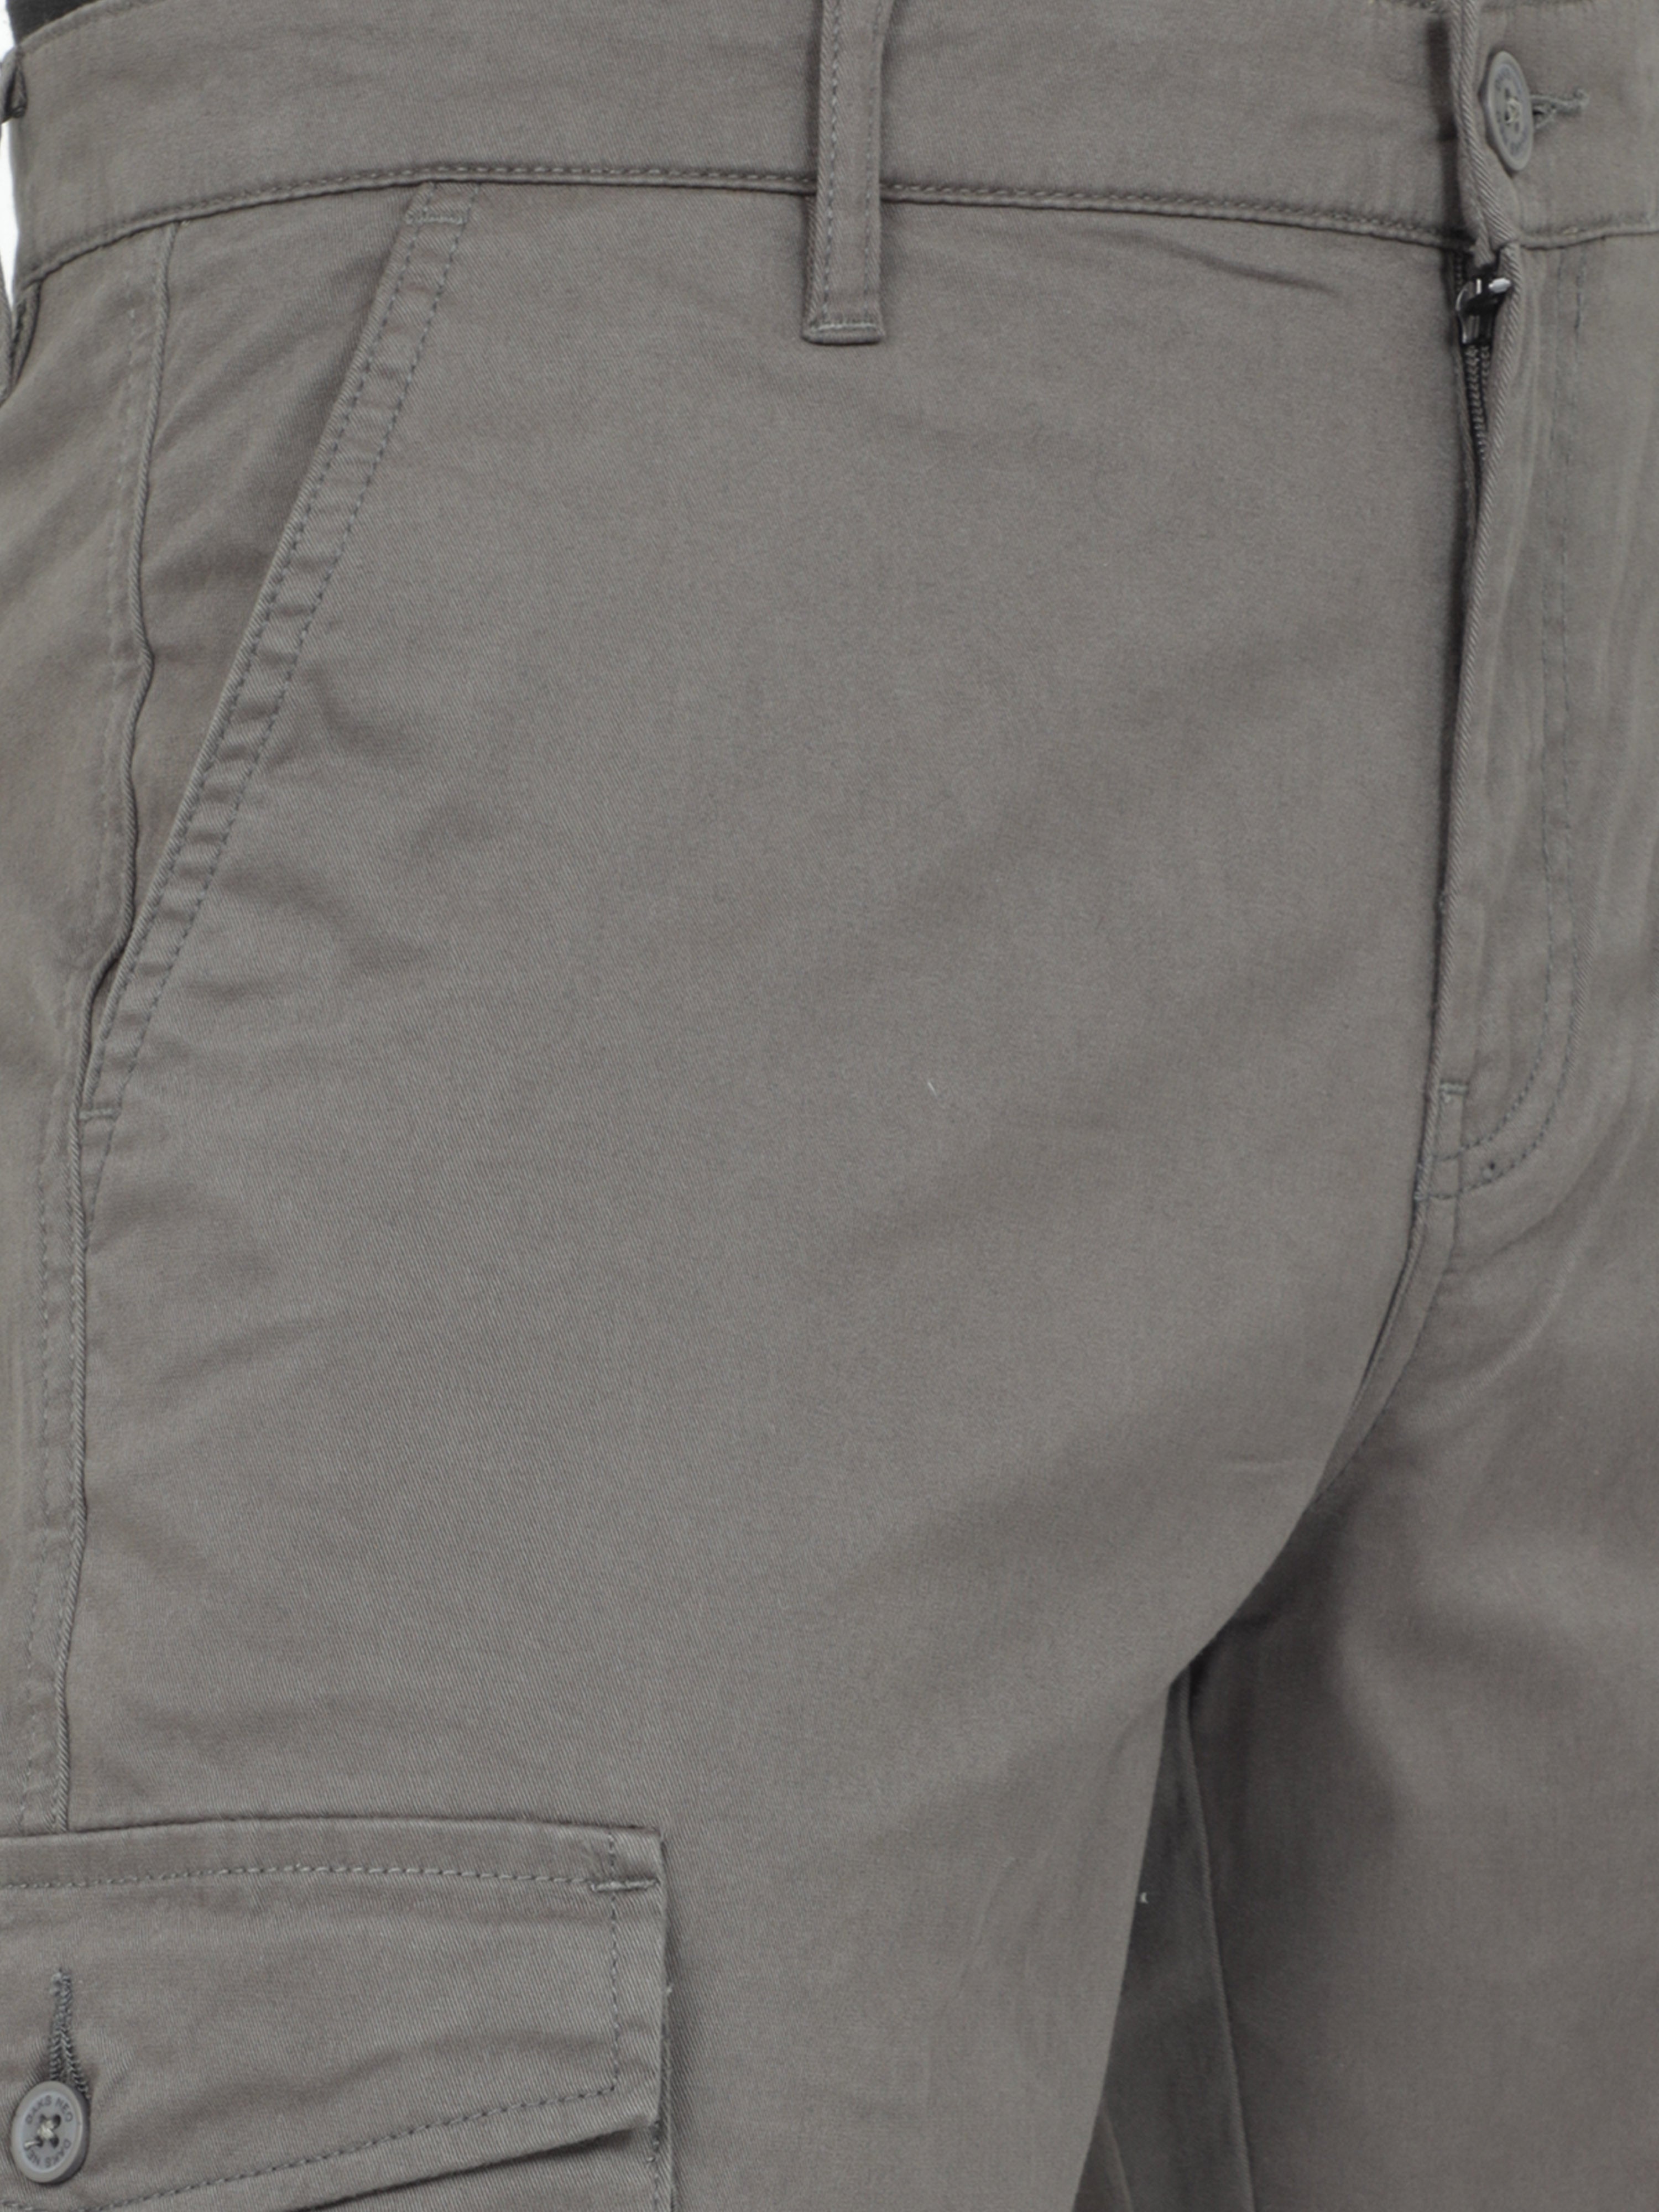 No Boundaries Cargo pants shorts combo convertible men's 32 x 30 tan beige  | eBay